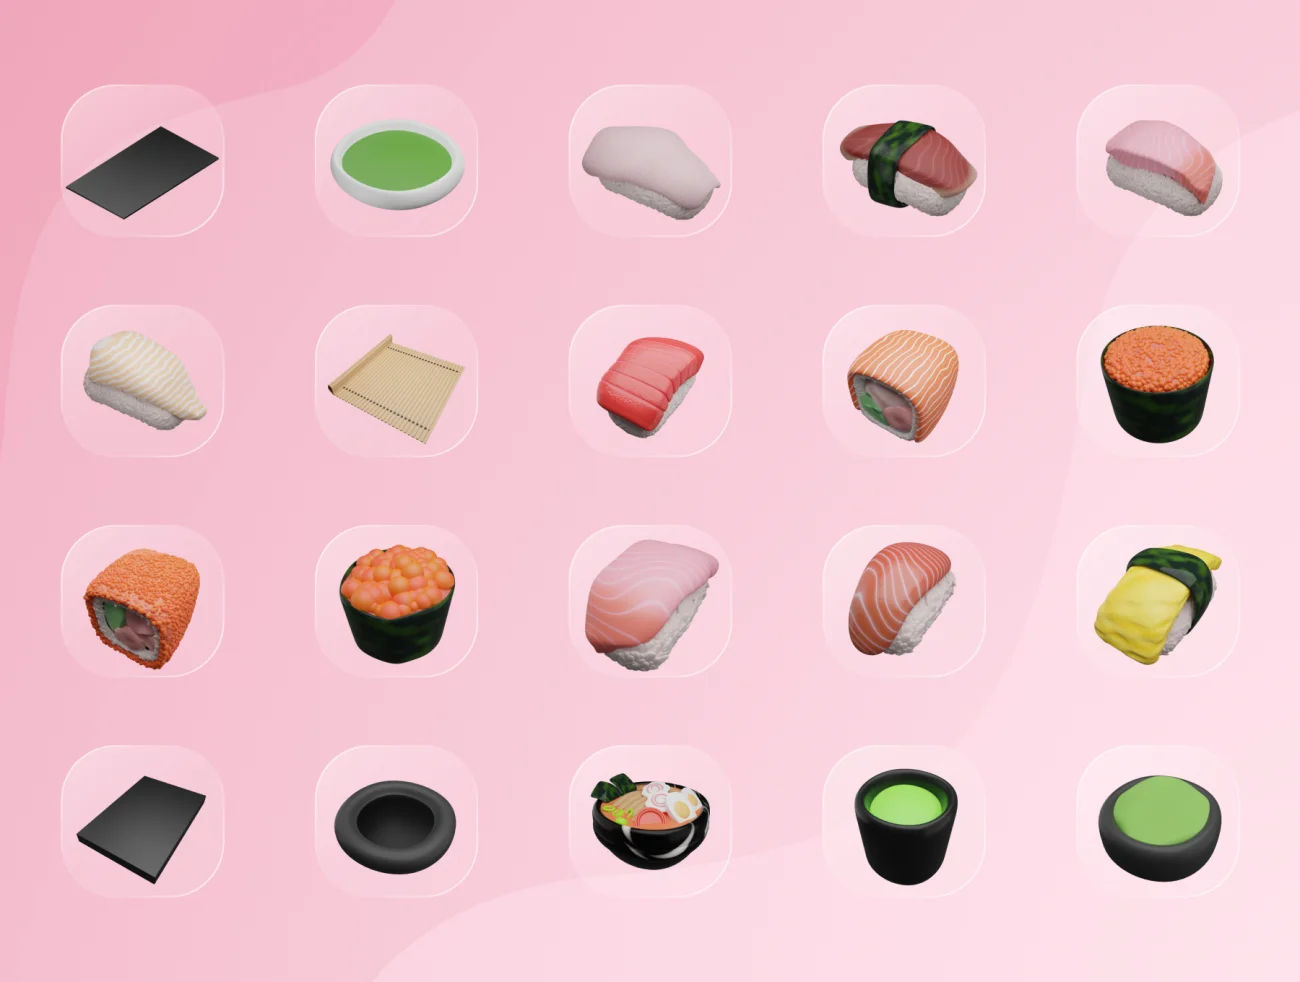 40款日本美食3D图标模型素材 3D Japanese Food Illustration .blender插图5